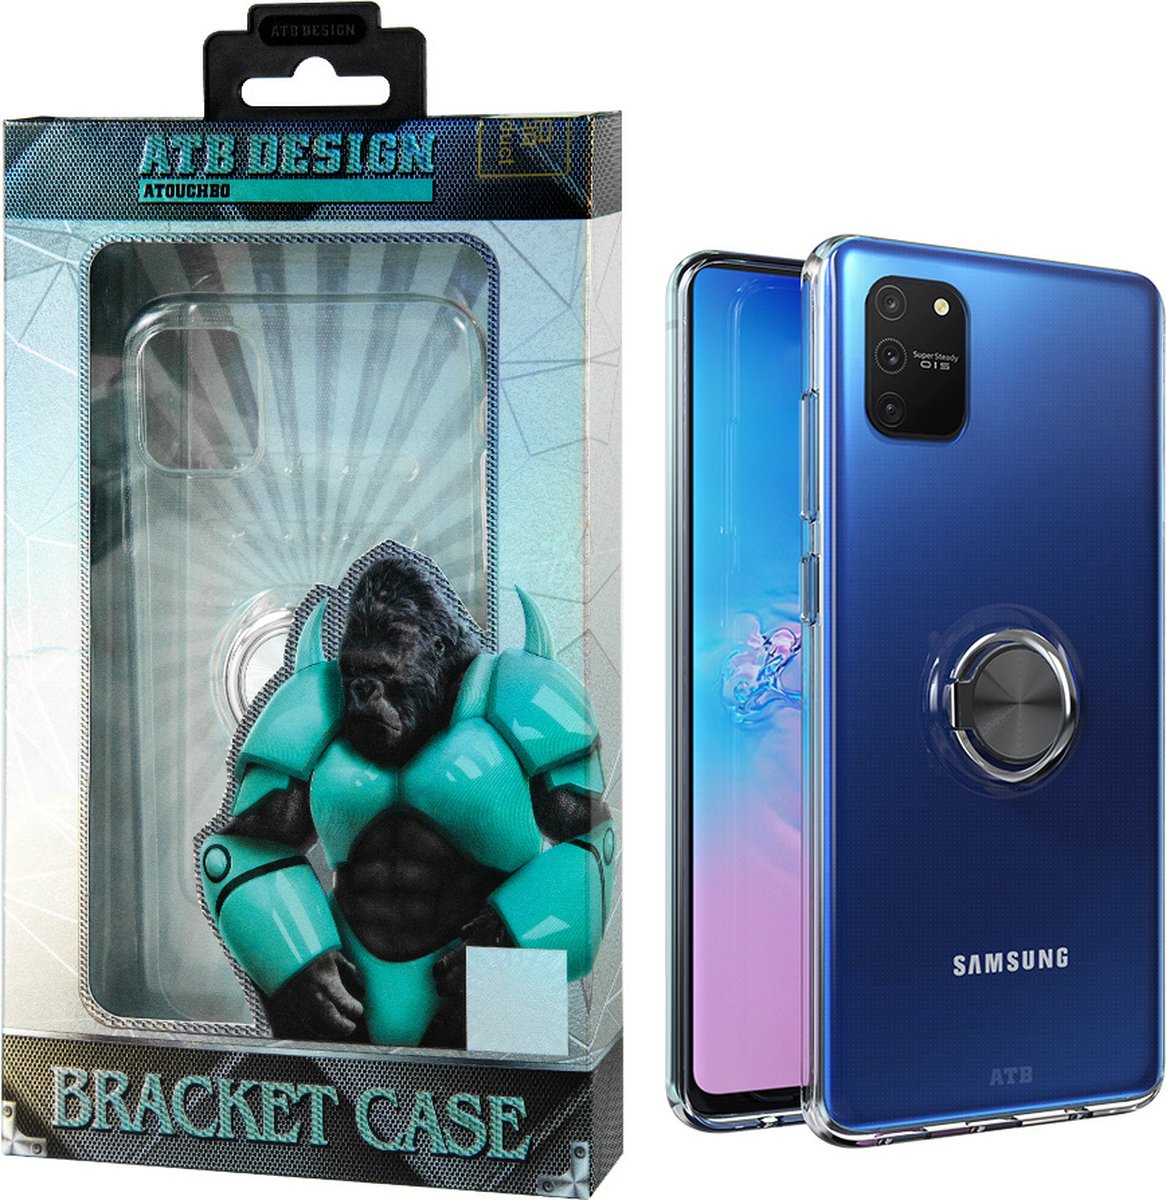 Atouchbo Bracket Case Samsung S10 Lite 2020 hoesje transparant